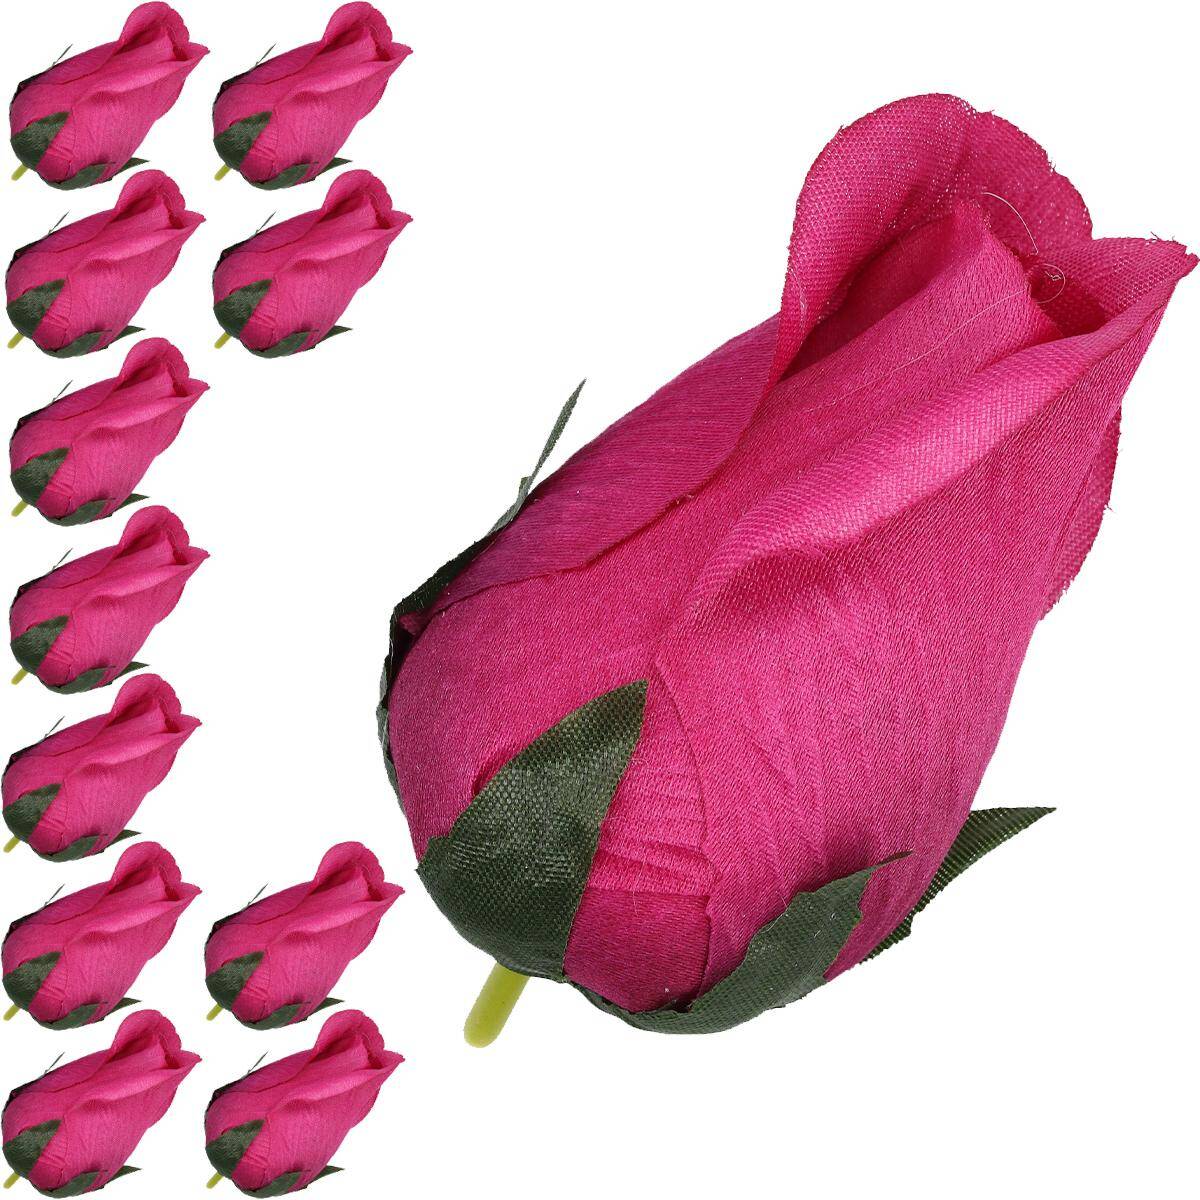 Kwiaty szt. główka pąk róża 9cm AMARANT